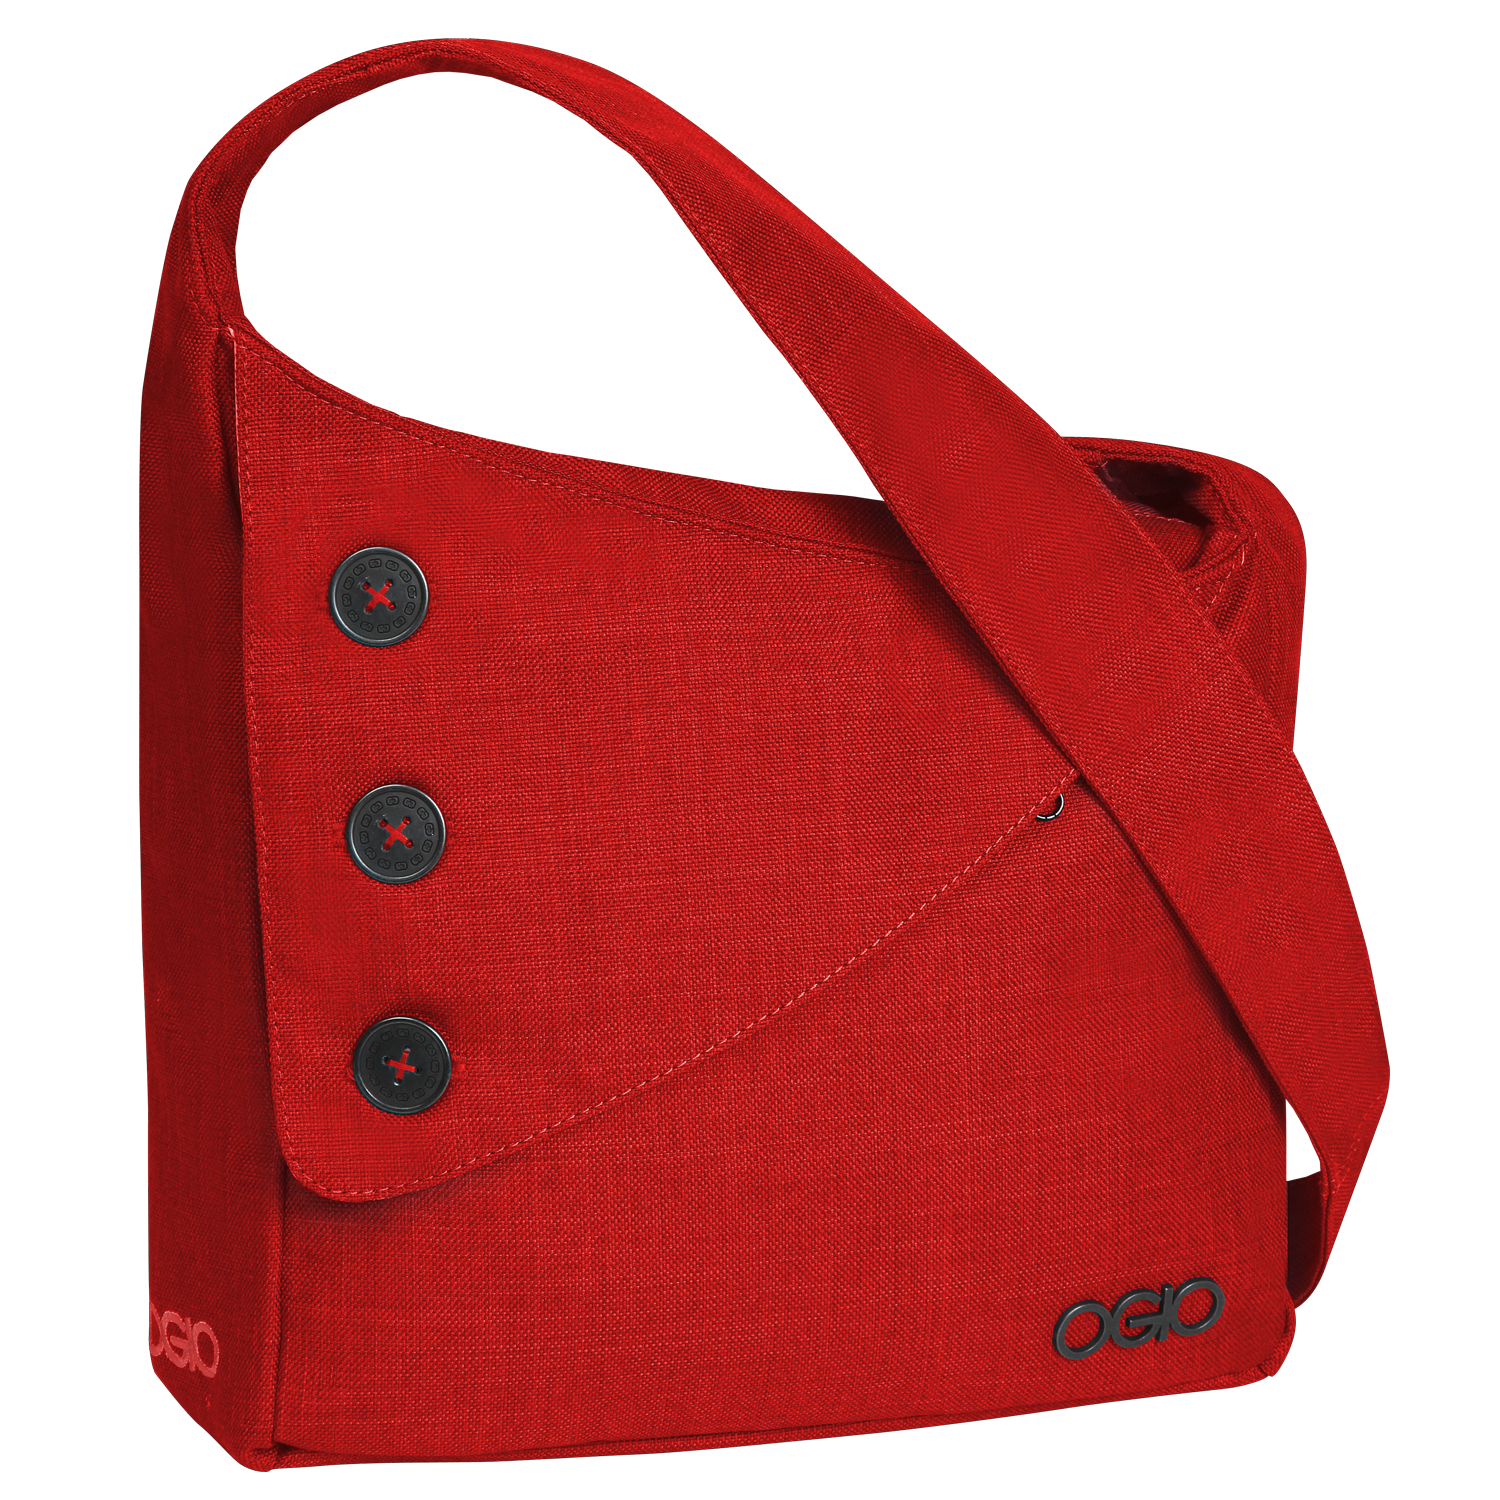 Red Women Bag Png Image - Bag, Transparent background PNG HD thumbnail